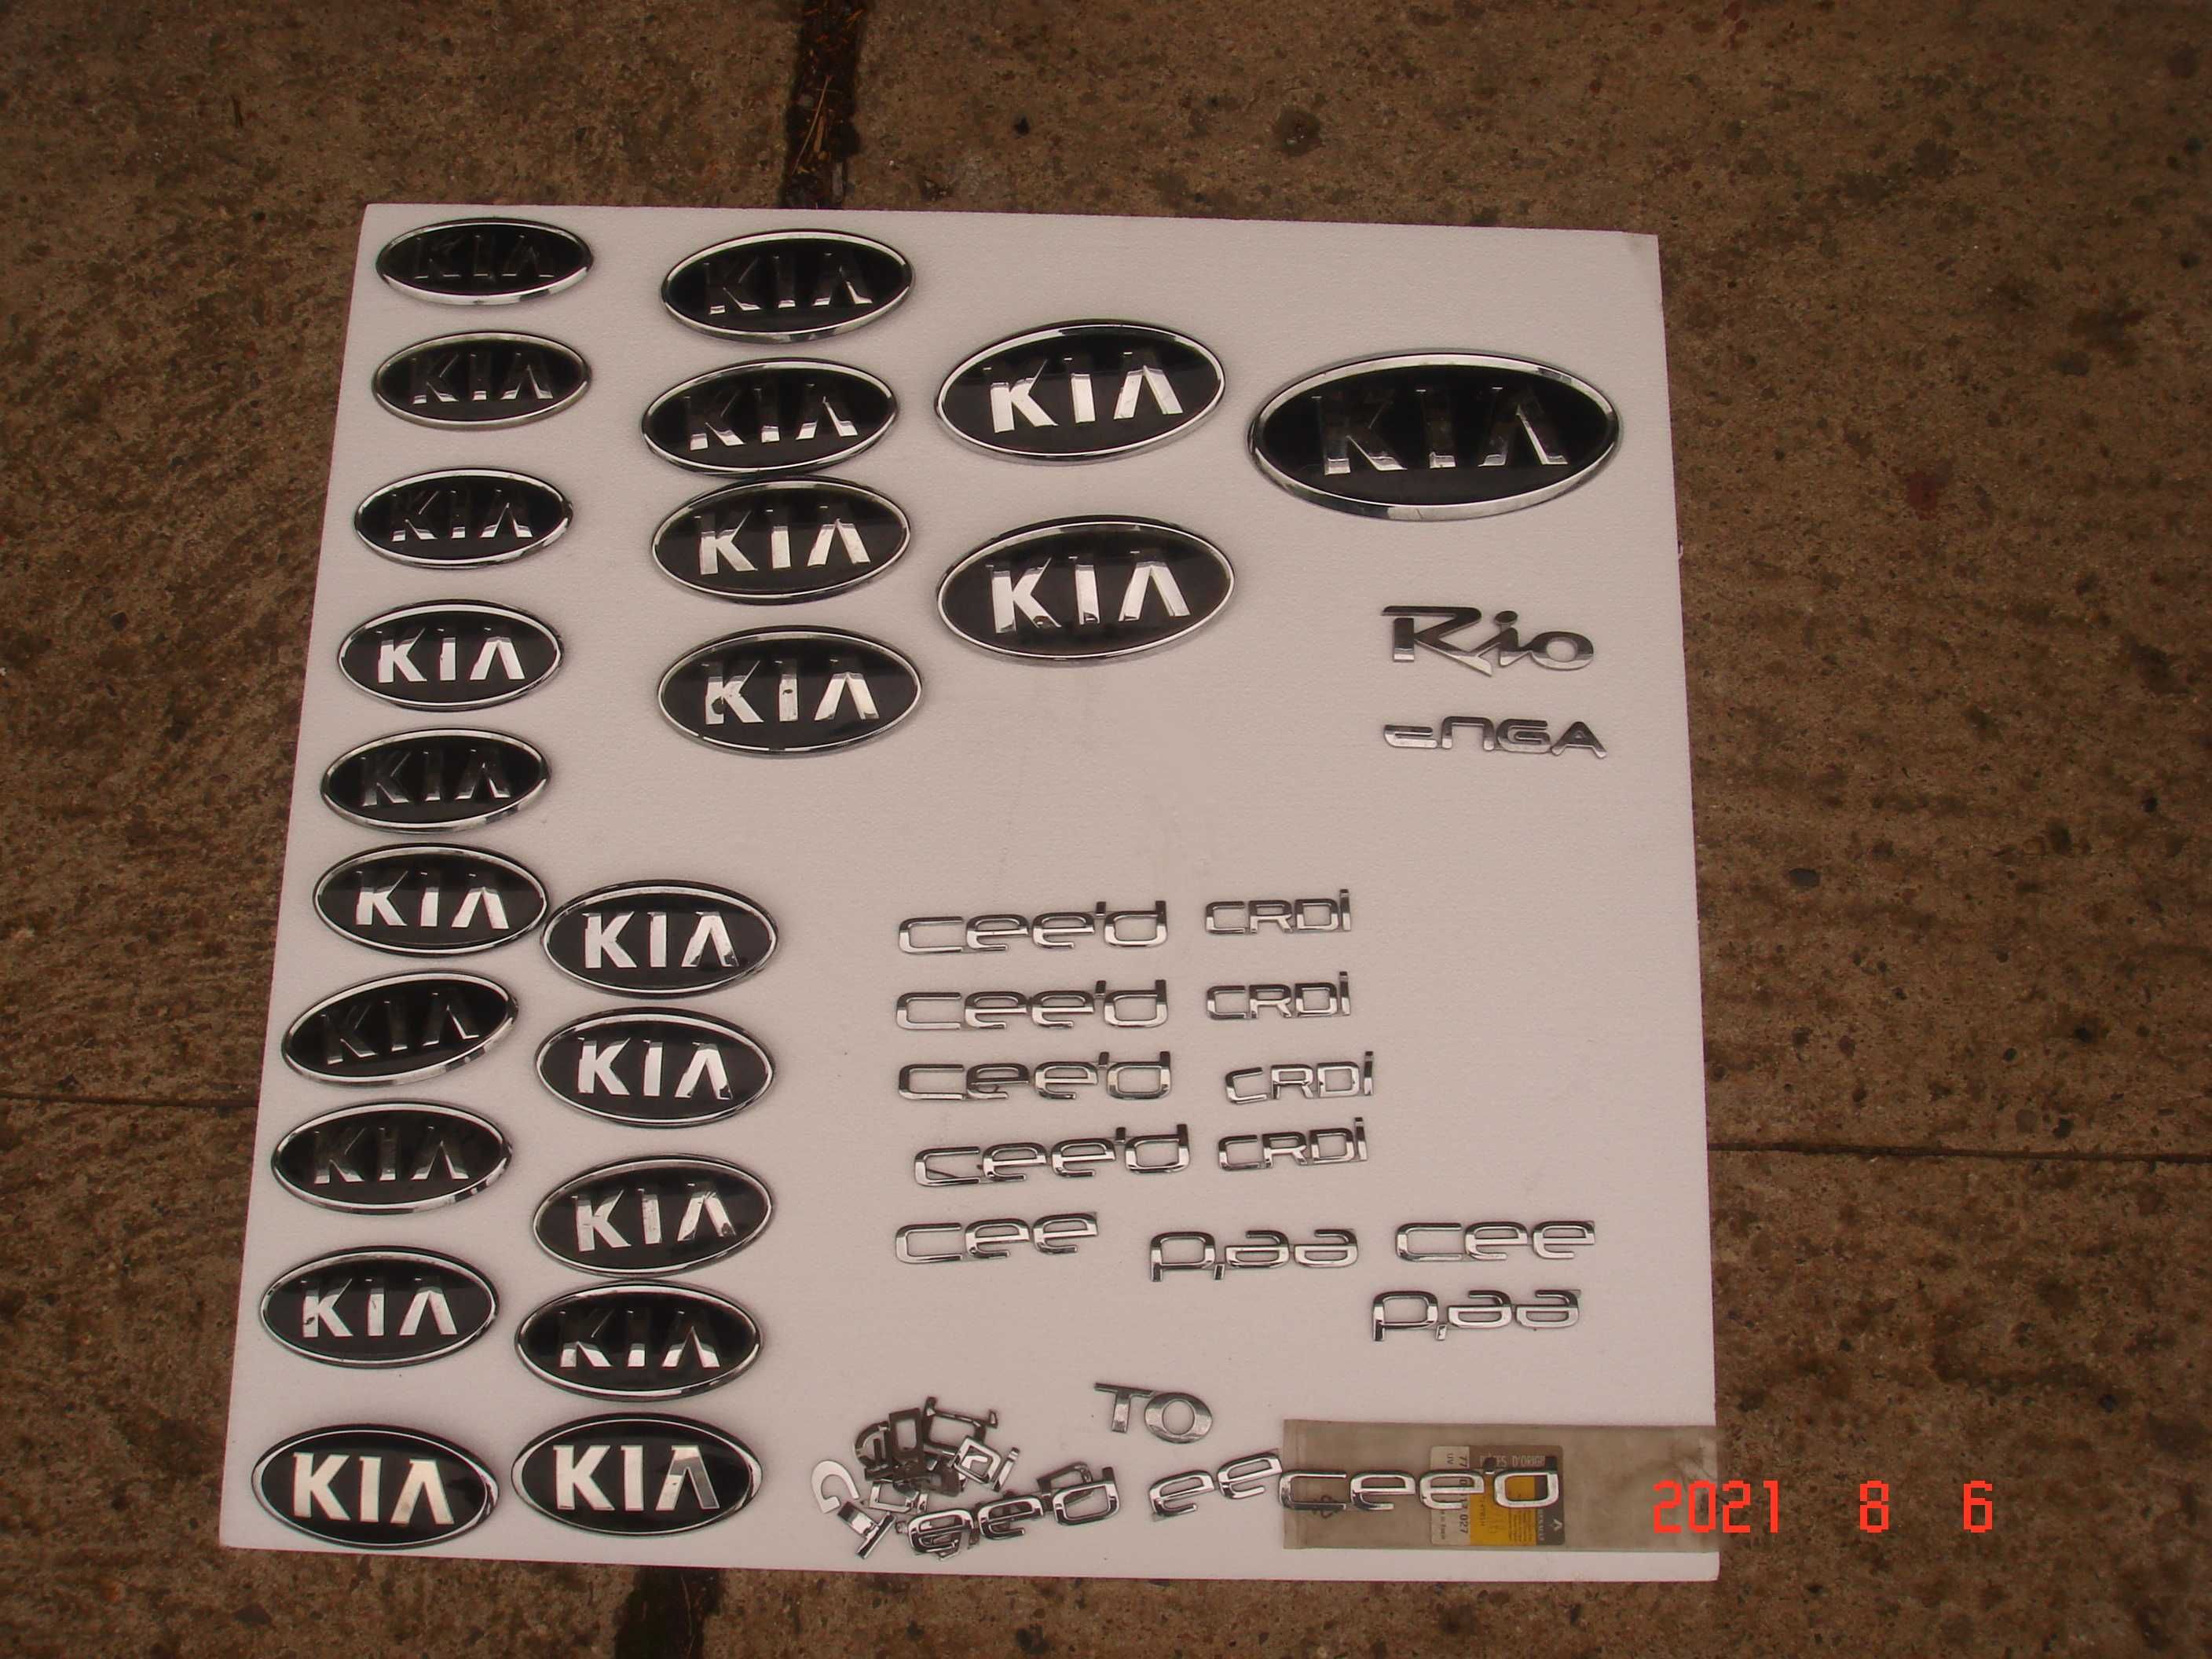 Emblemat-Logo Producenta,napisy,znaczki. KIA Ceed,Sportage,Rio,Venga i